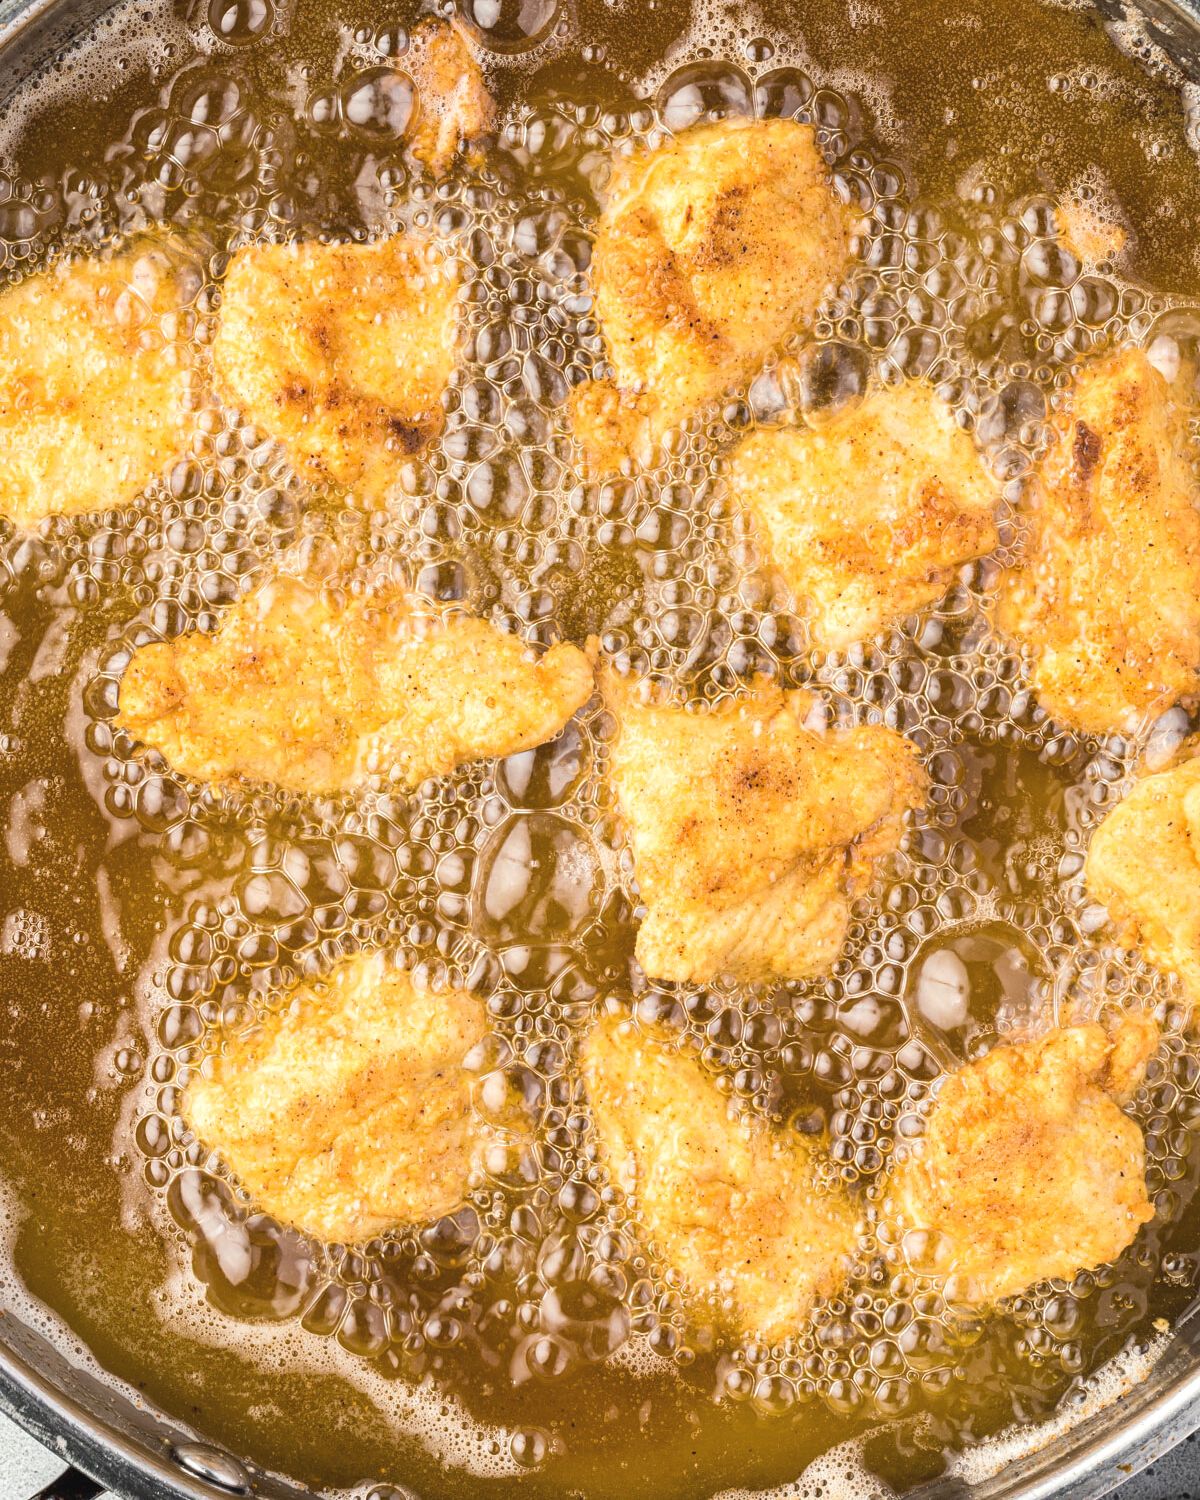 Crispy, golden brown chicken bites in a pan of hot oil.